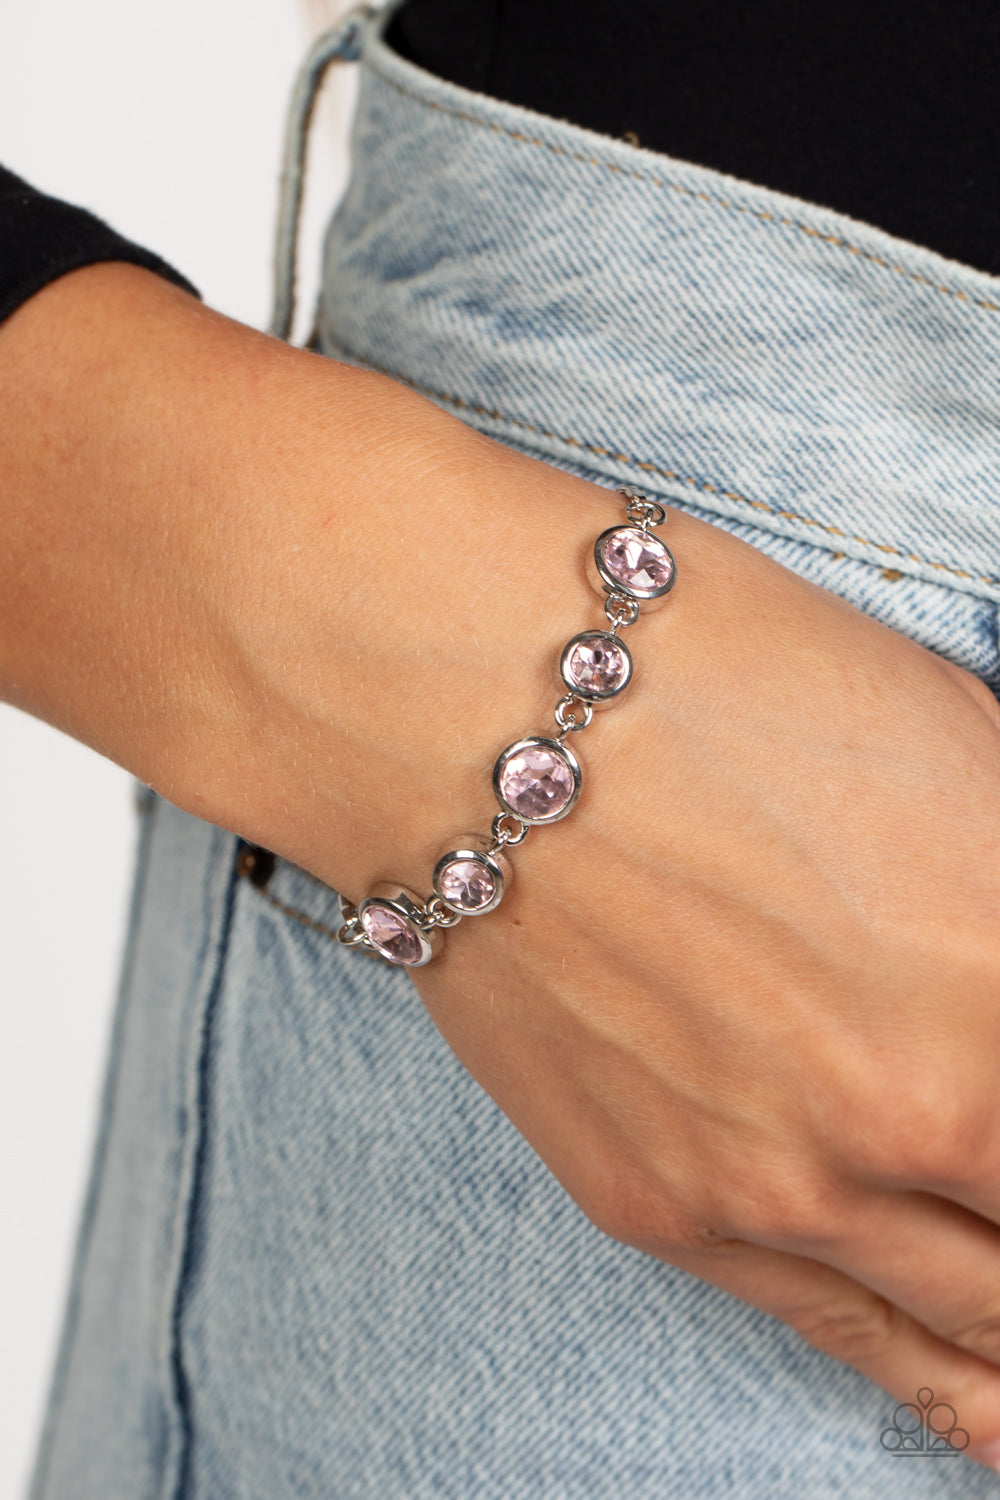 Pink Star Bracelet - Magical Kawaiiland Shop